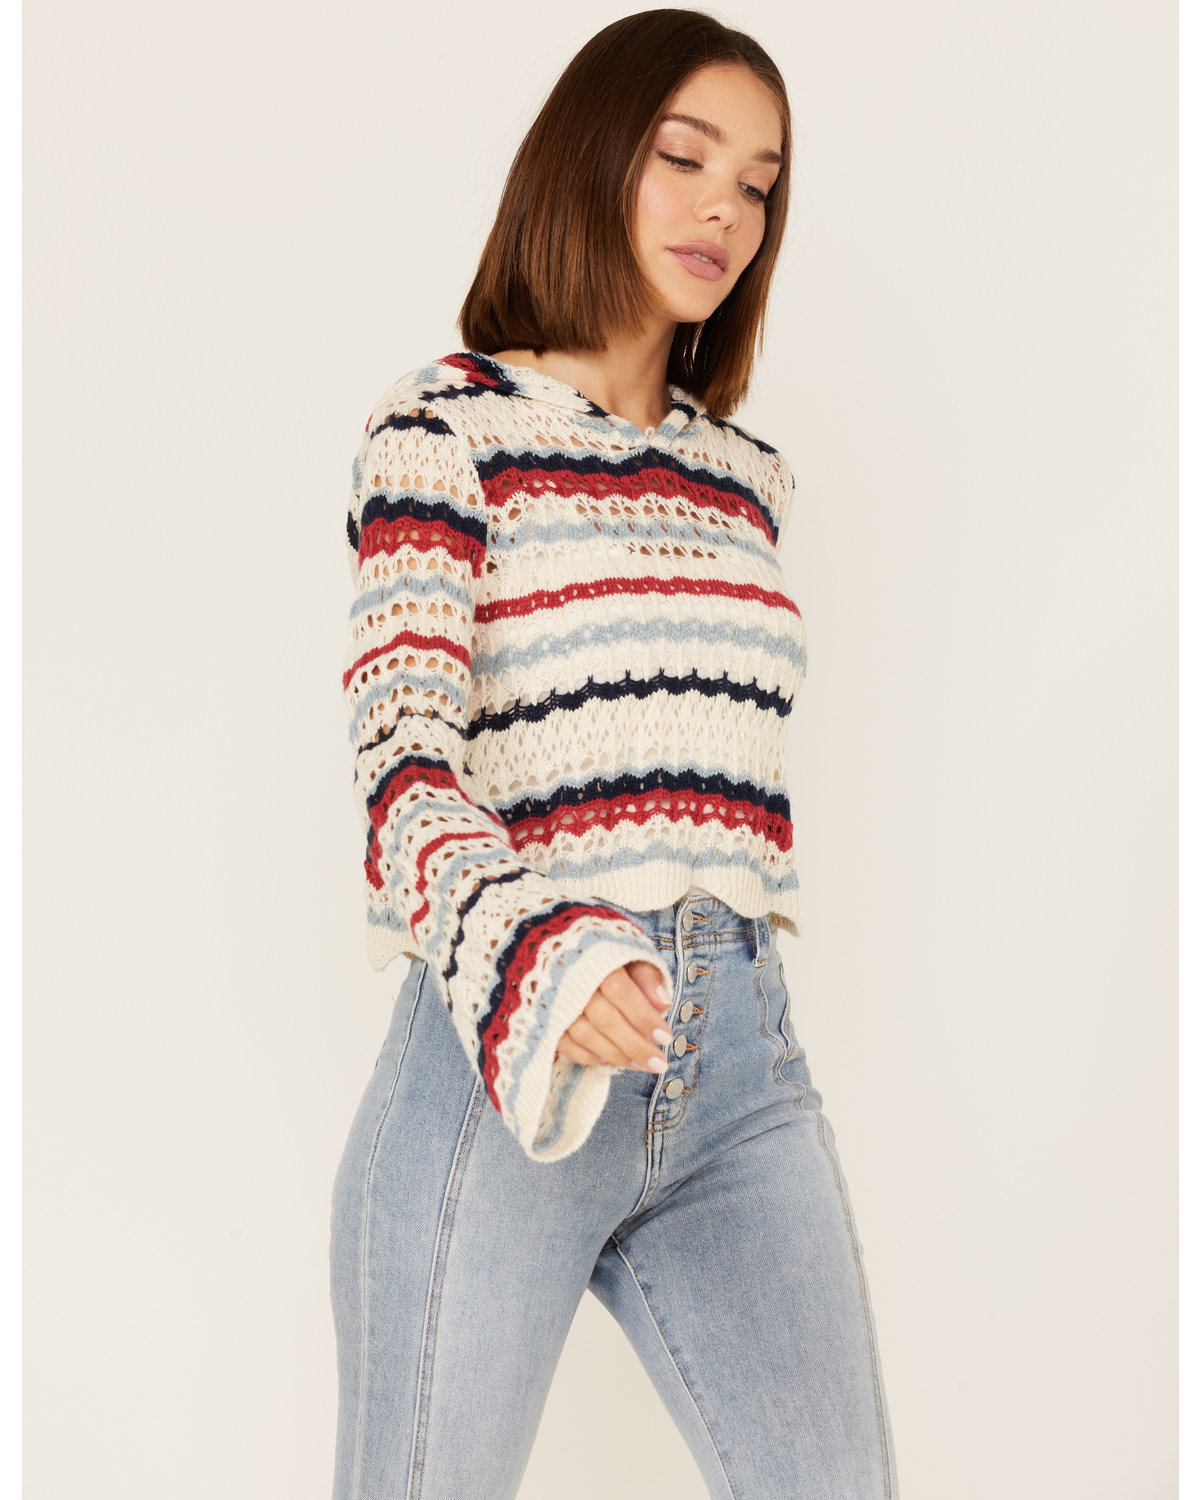 Panhandle Women's Americana Stripe Crochet Knit Hooded Sweater